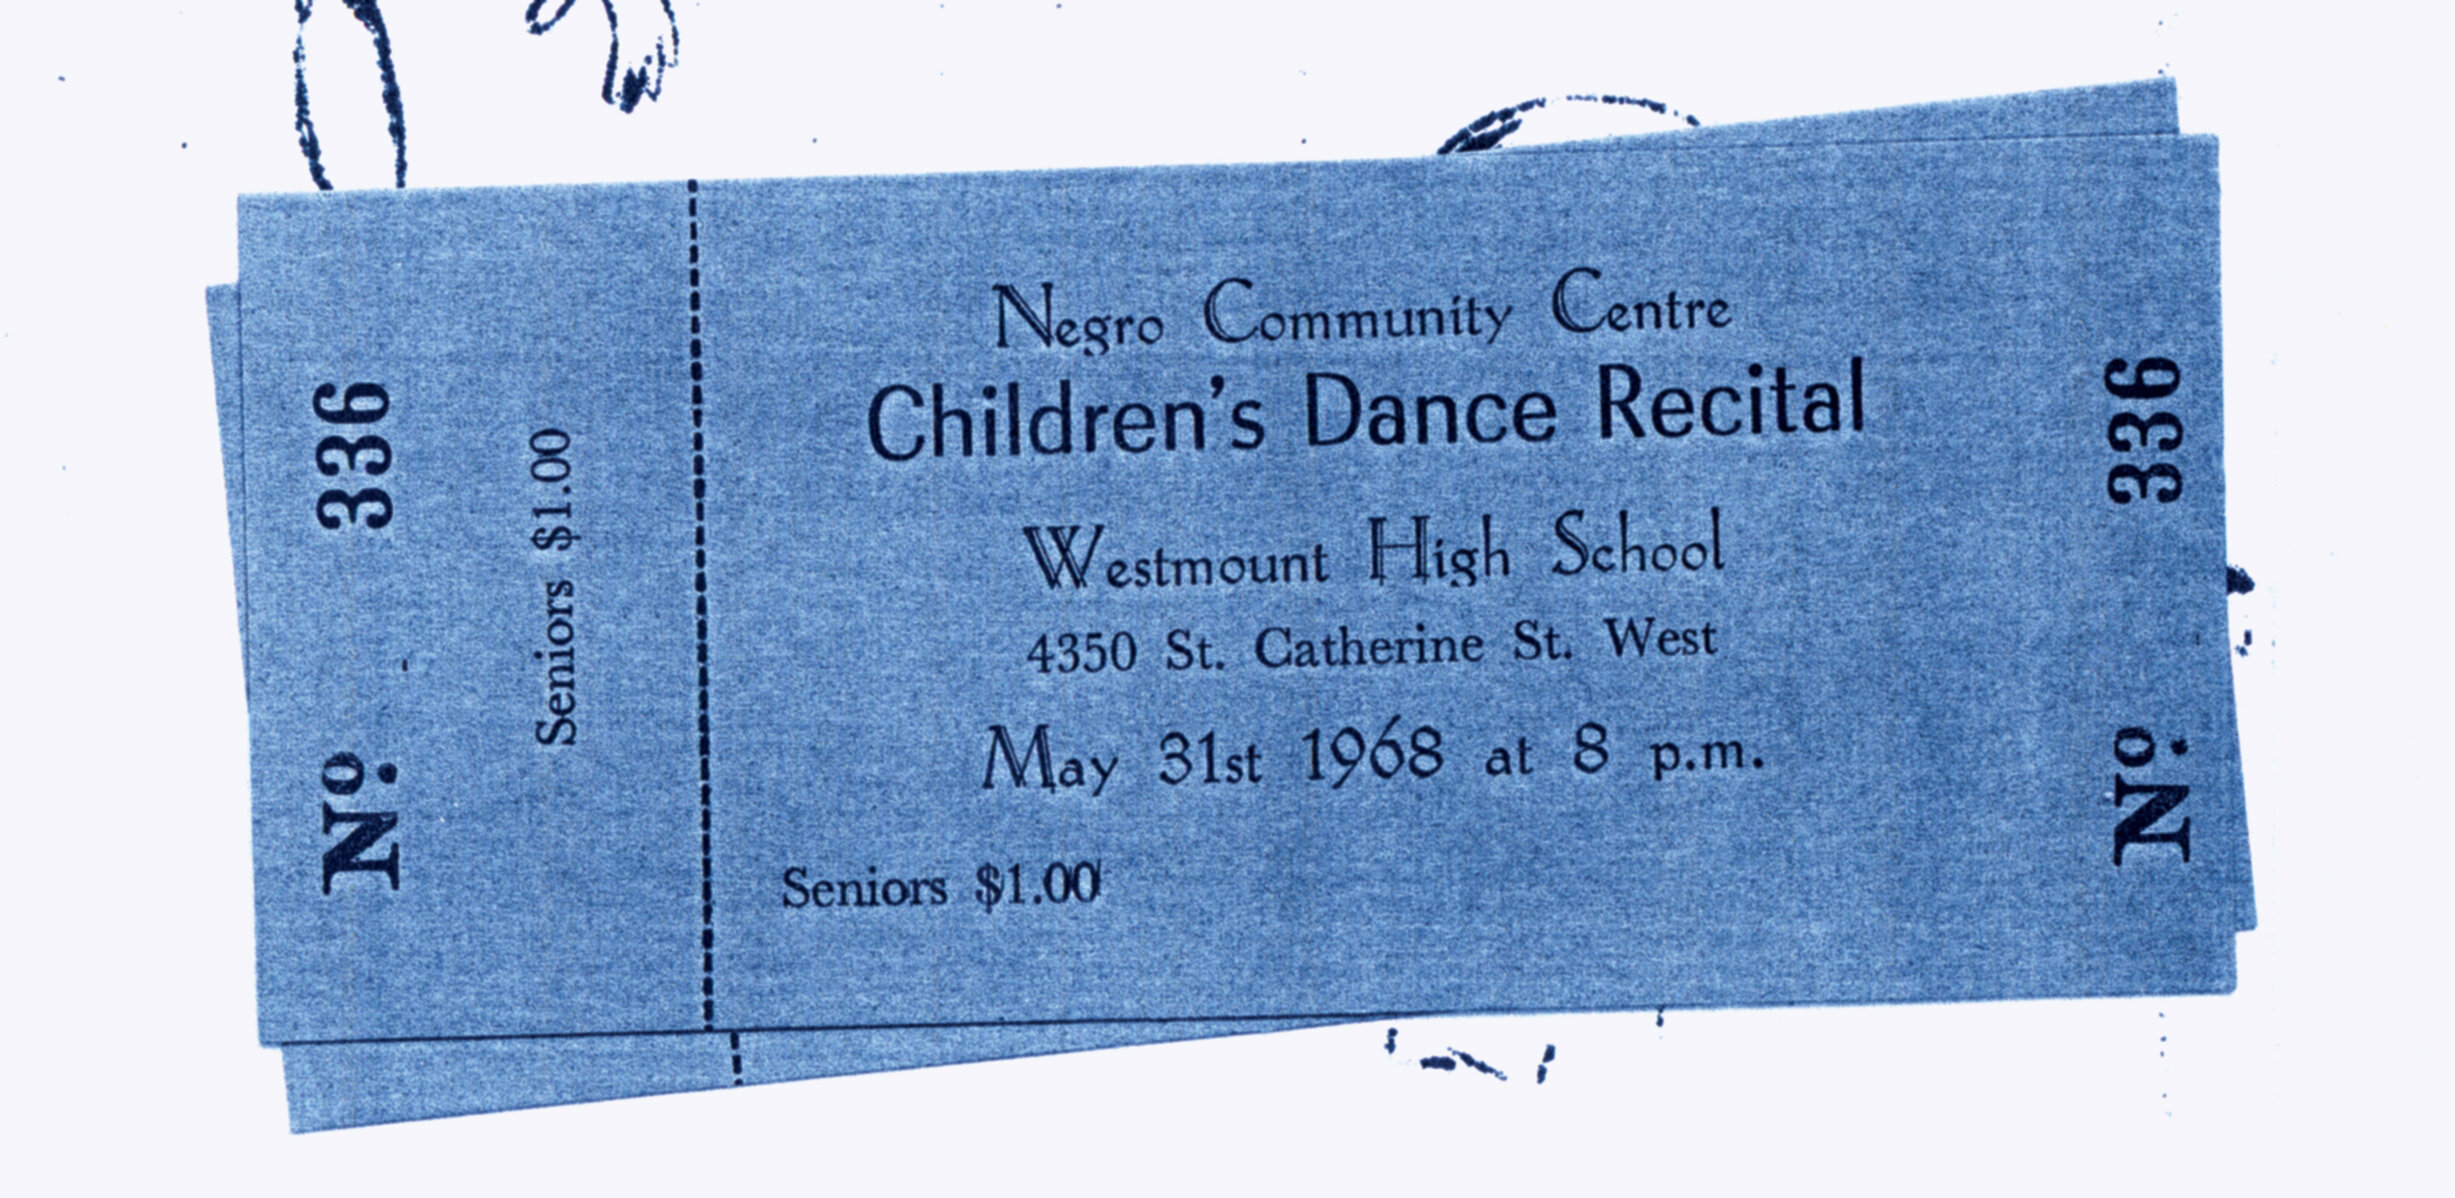 Negro Community Centre ticket